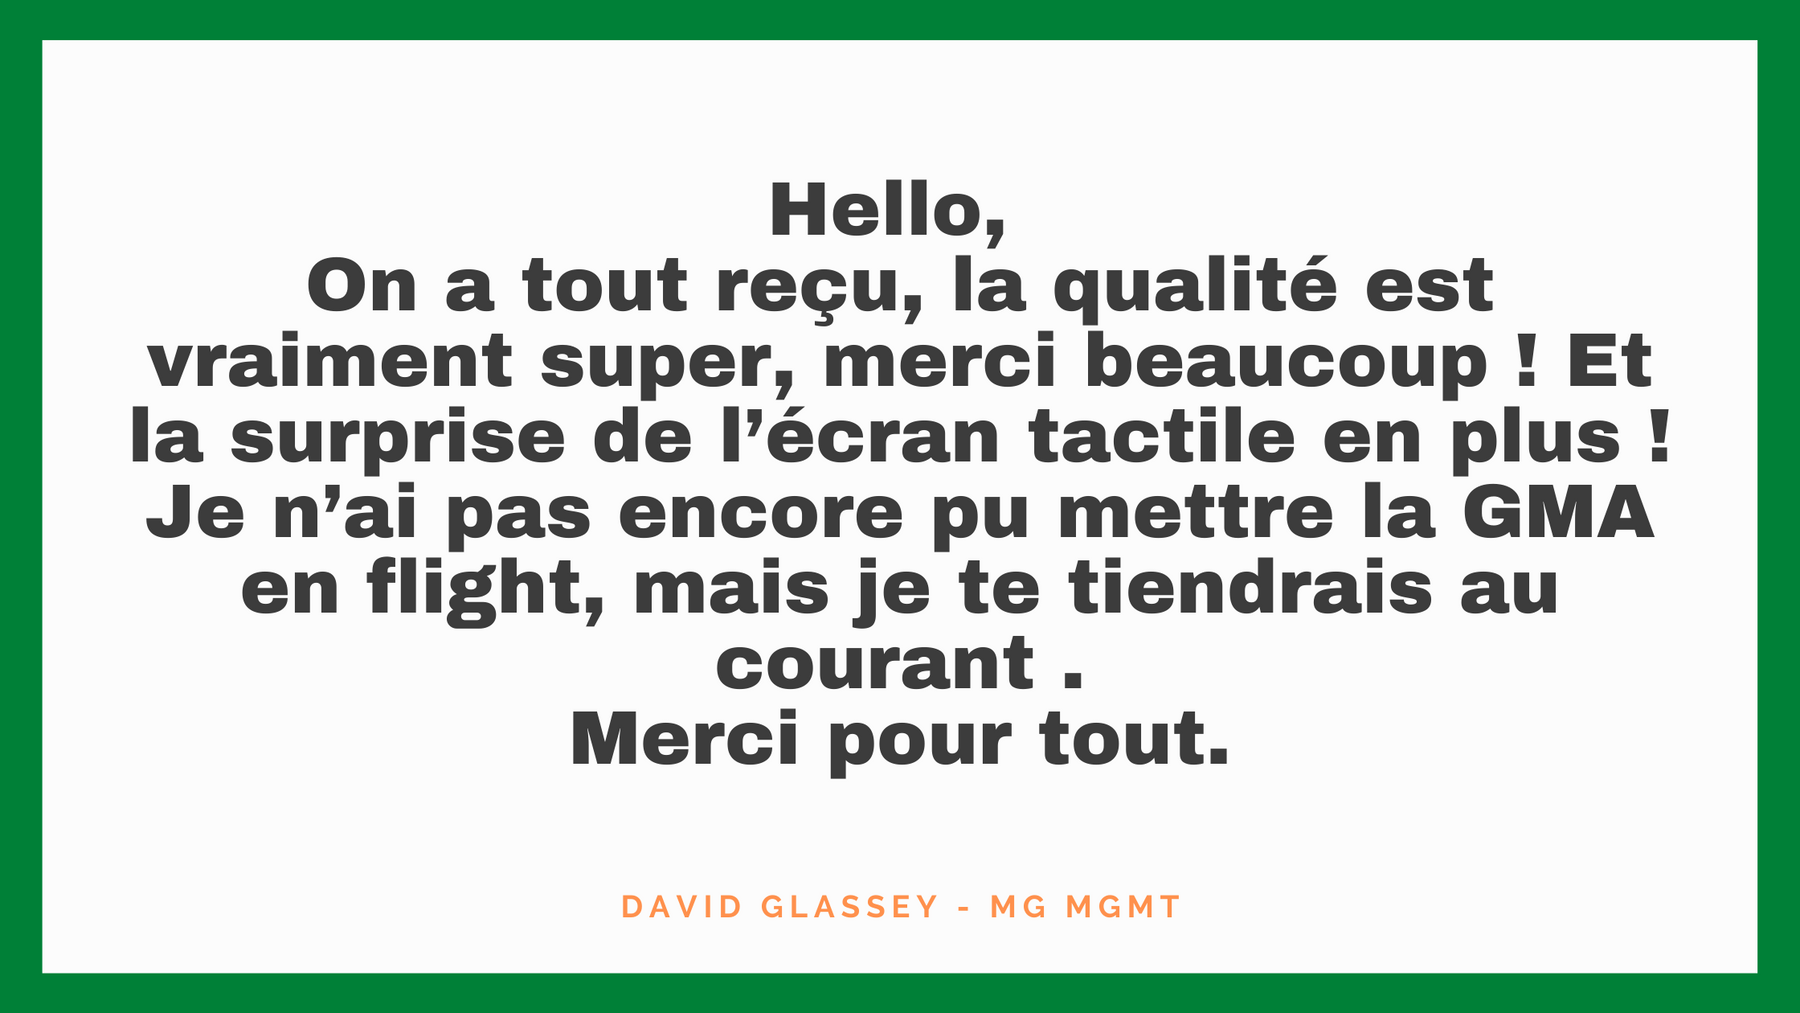 David Glassey - MG MGMT